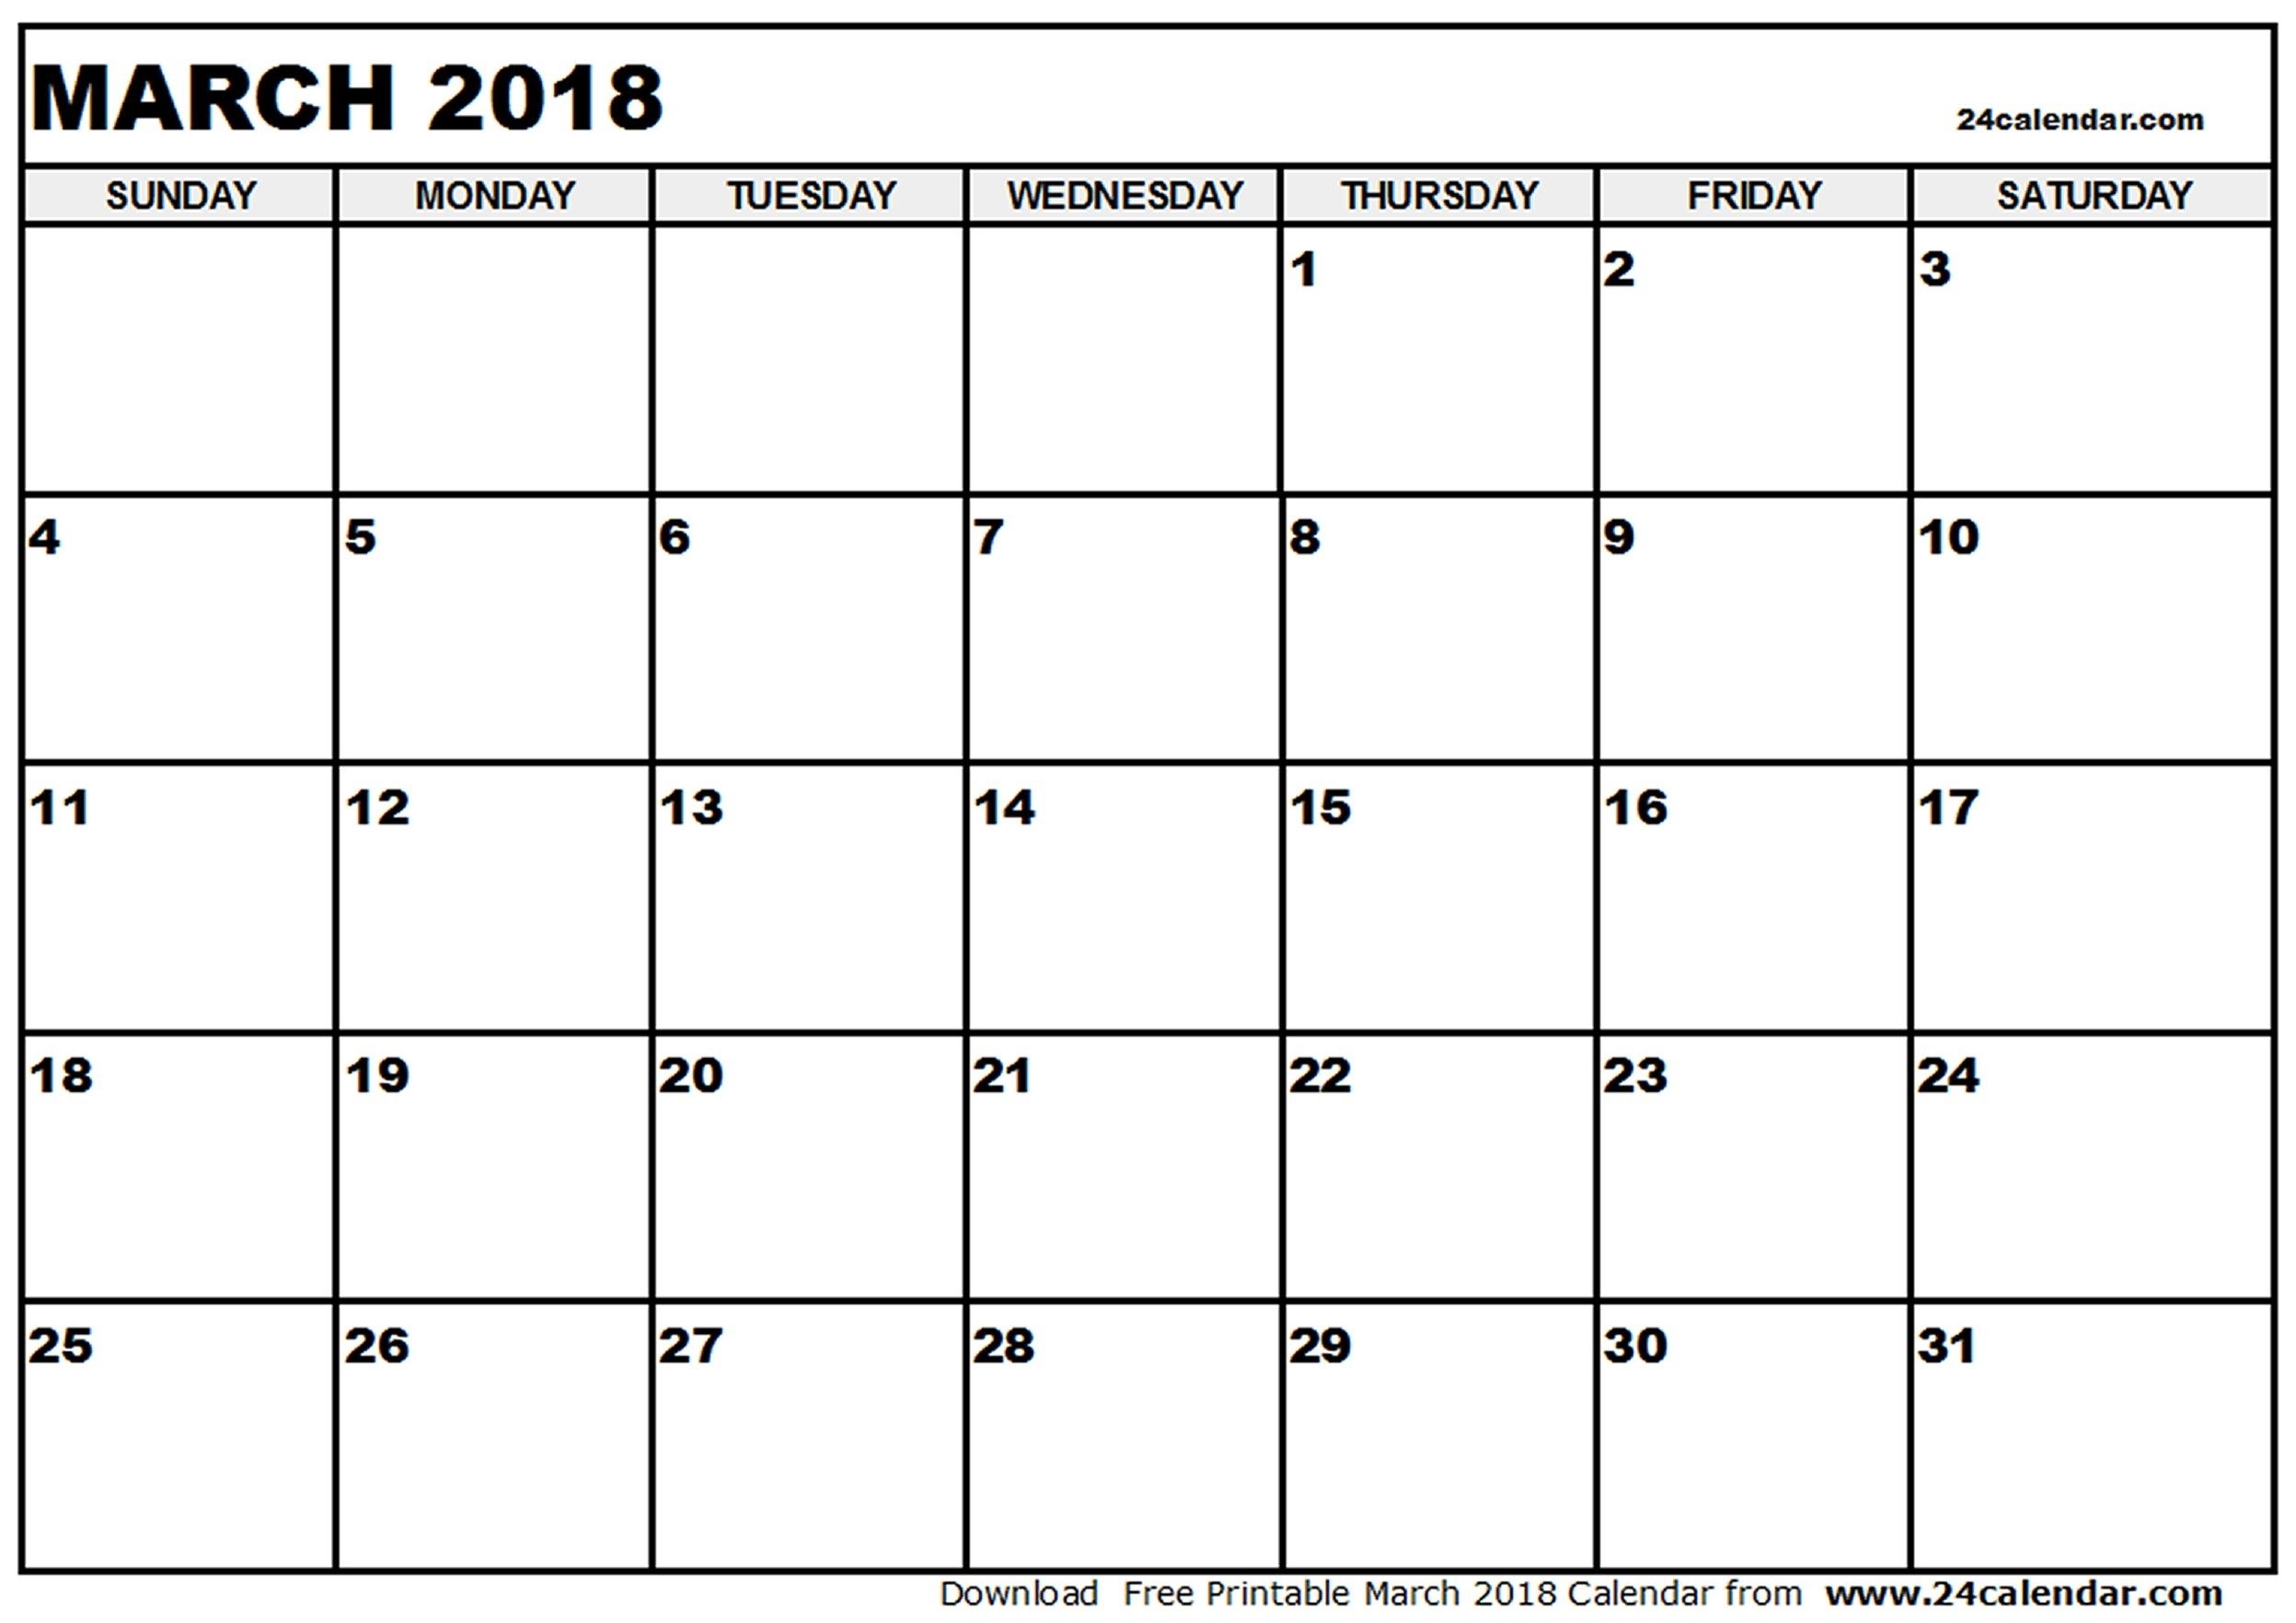 March 2018 Calendar Designs | Print Calendar, Blank Calendar